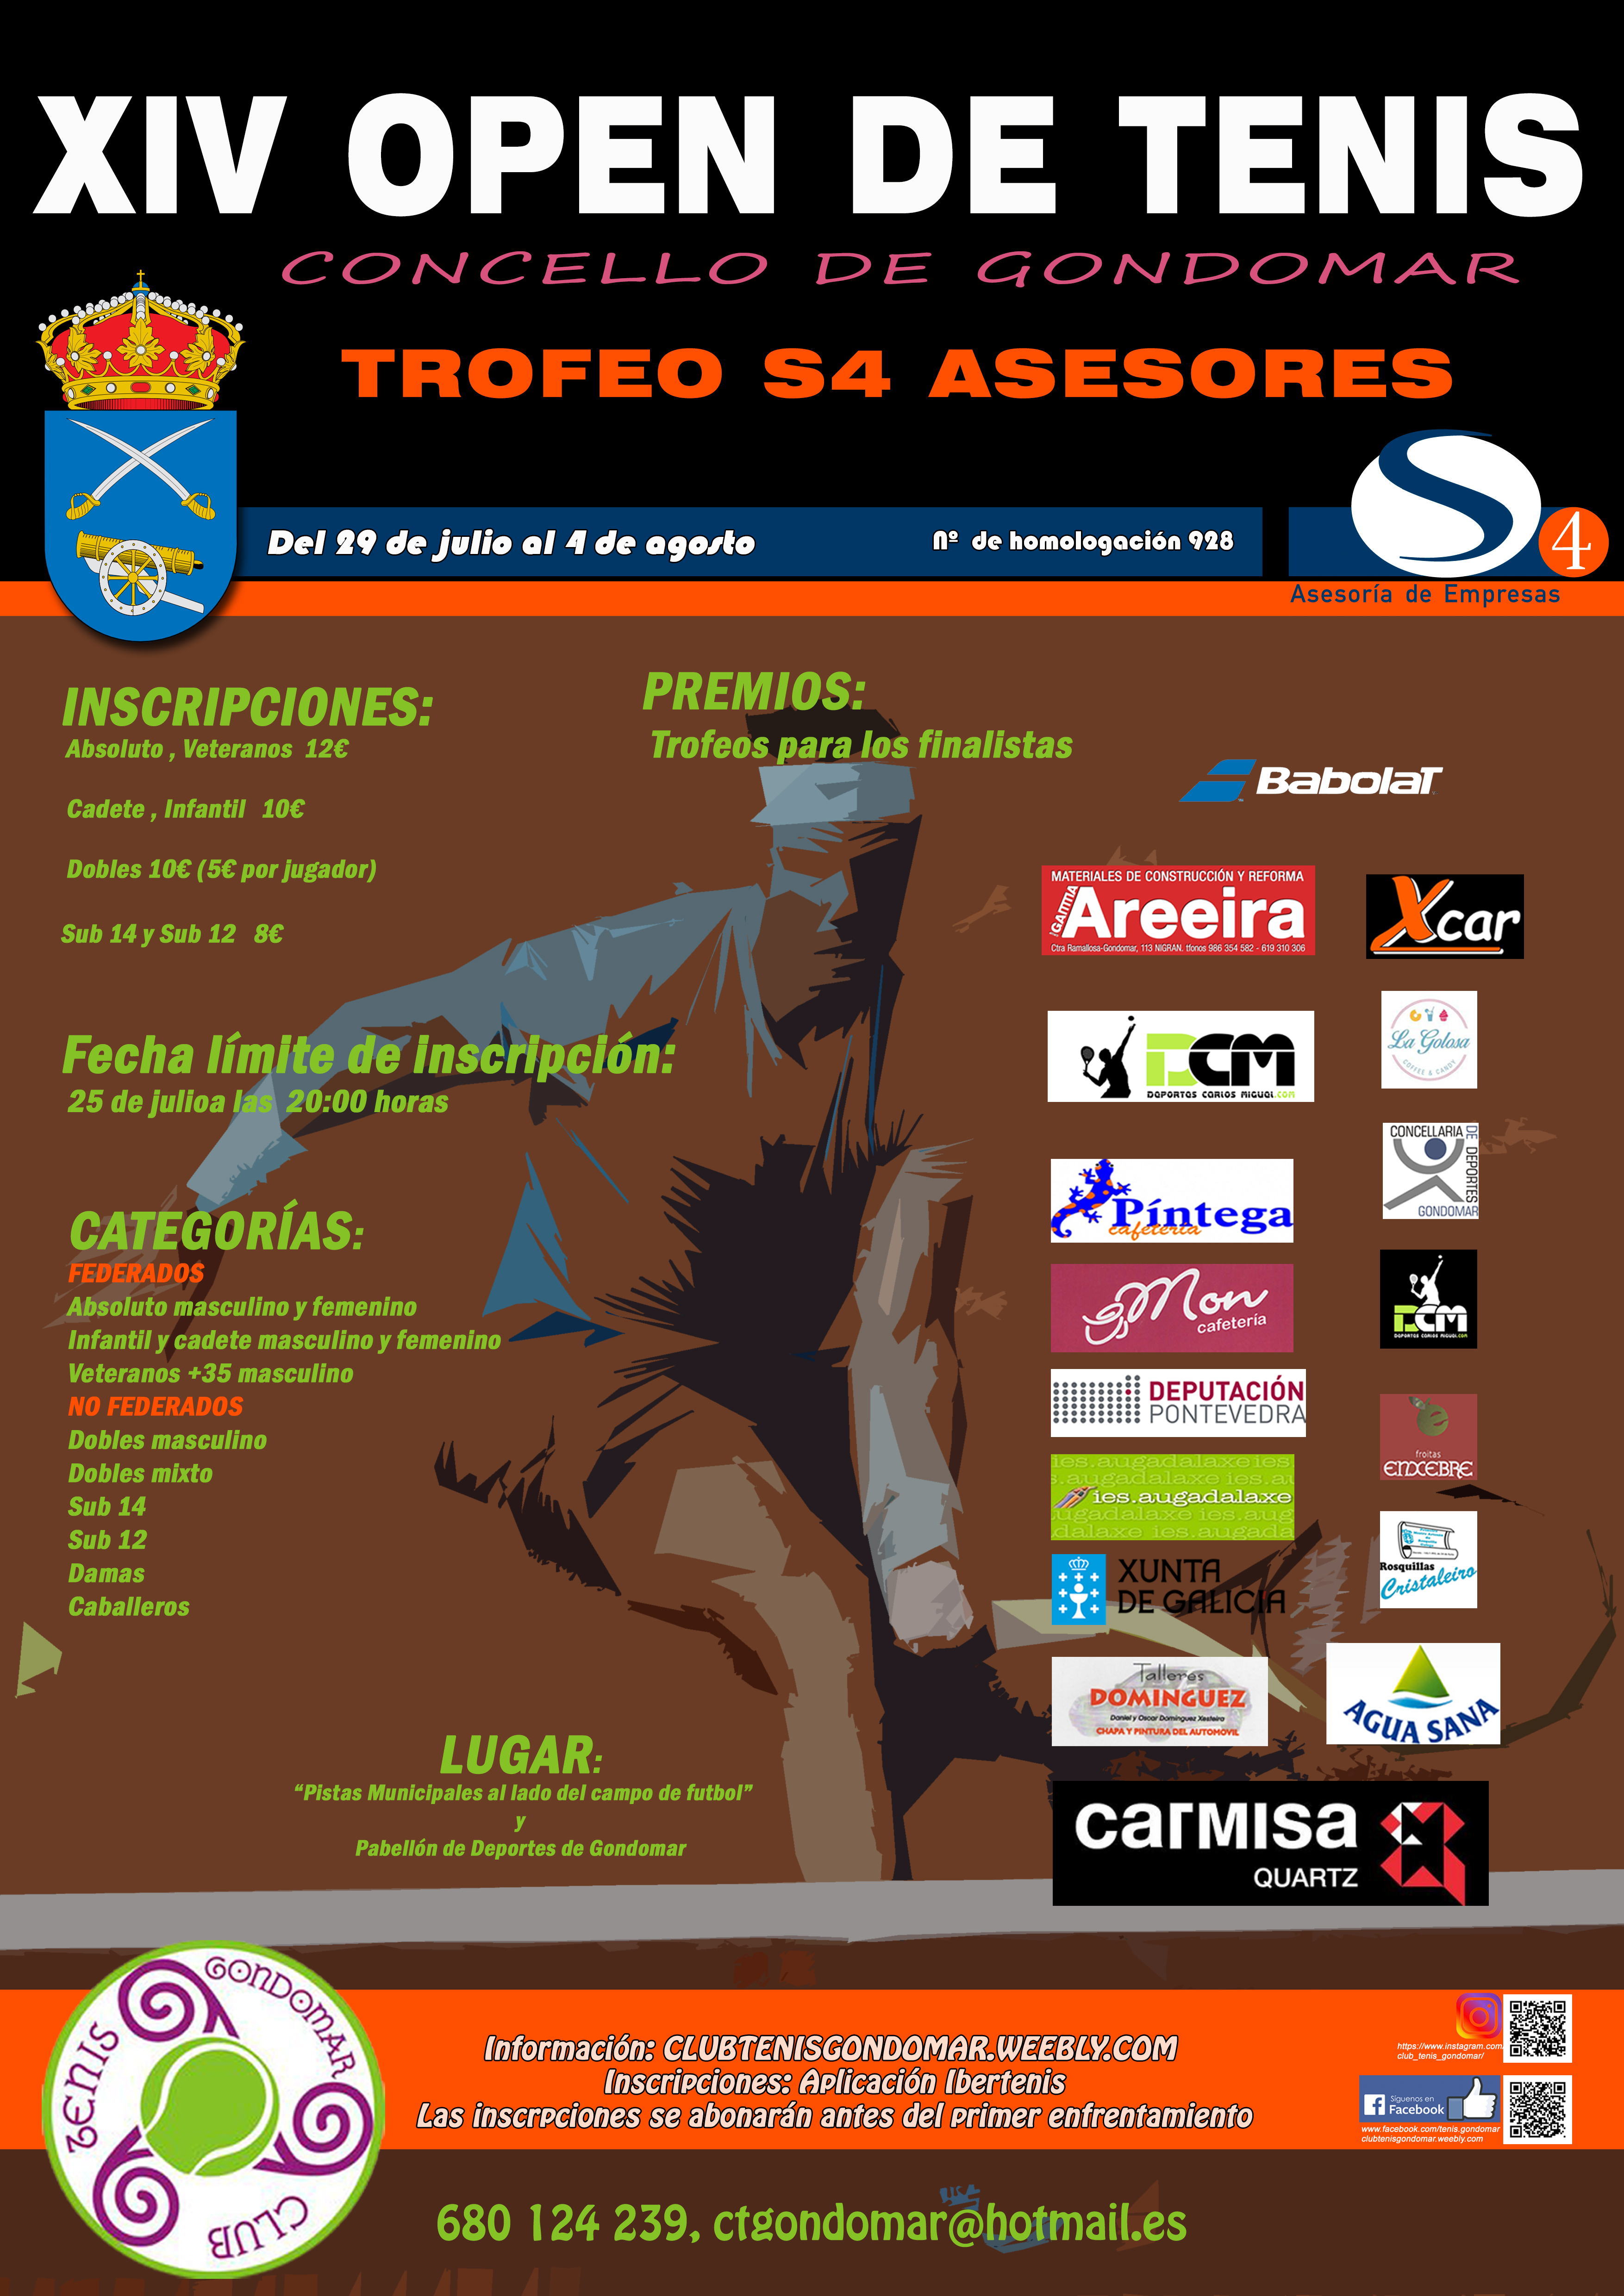 Cartel del XIV Open de Tenis Concello de Gondomar - Trofeo S4 Asesores